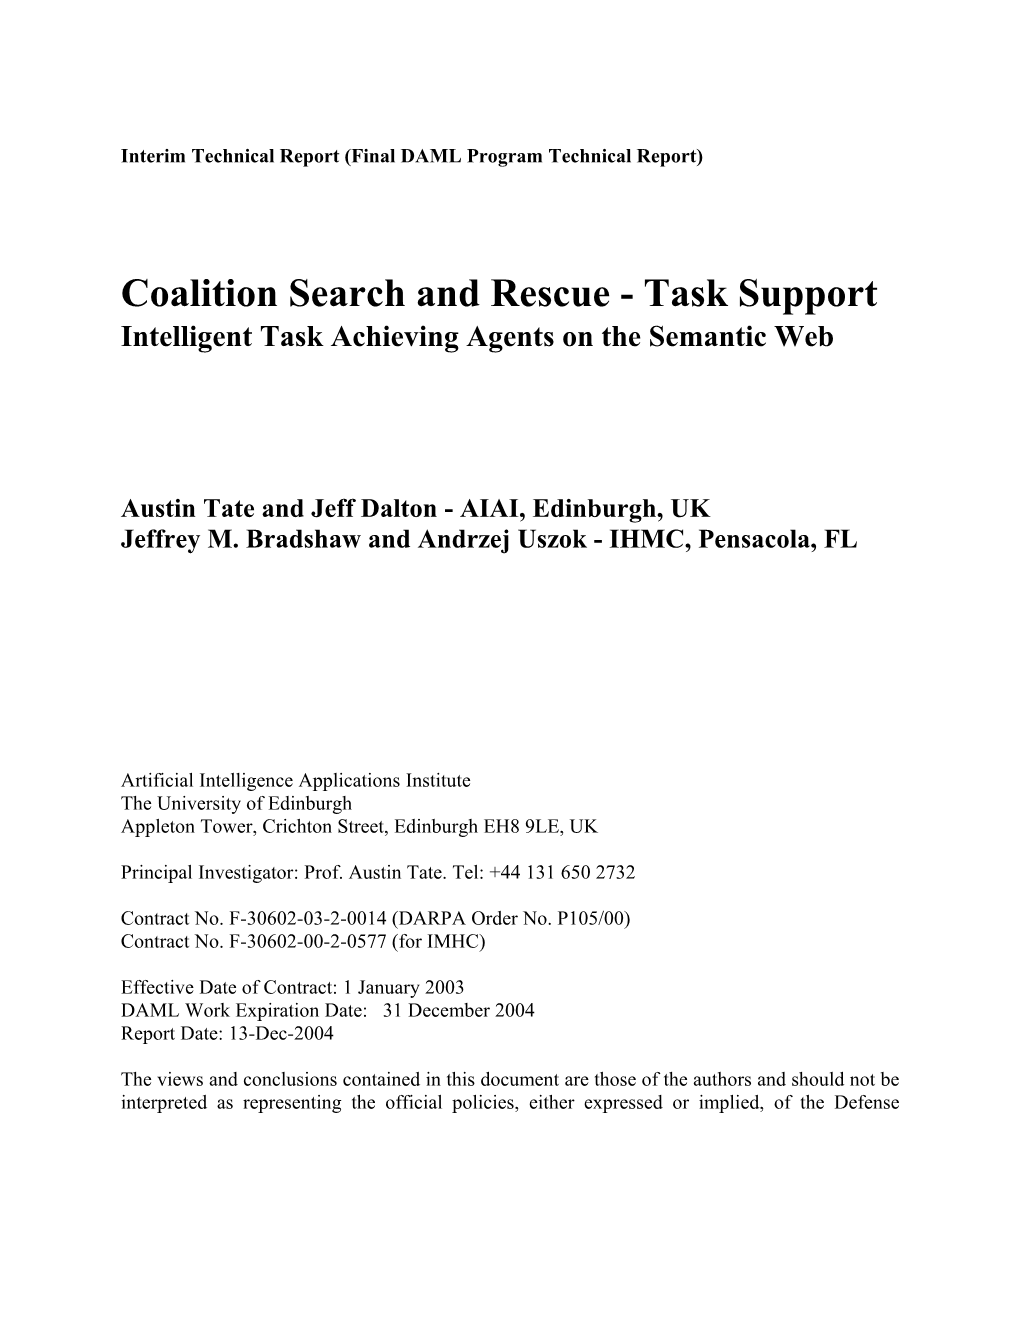 DARPA I-X Final Report 2003